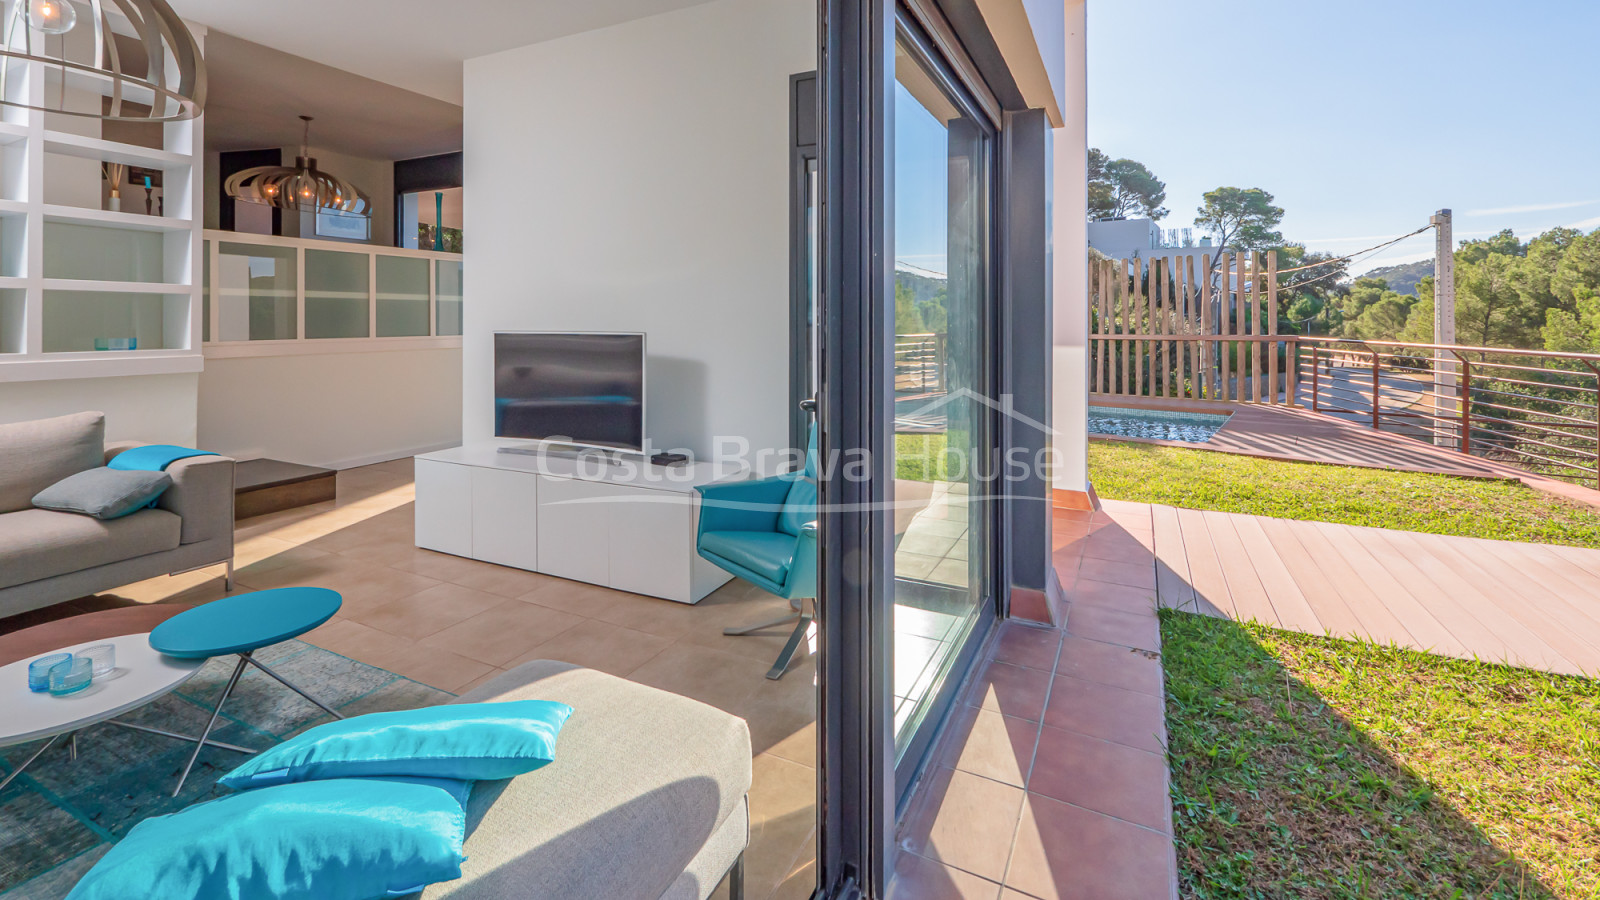 Luxury house with garden and pool in Tamariu Costa Brava